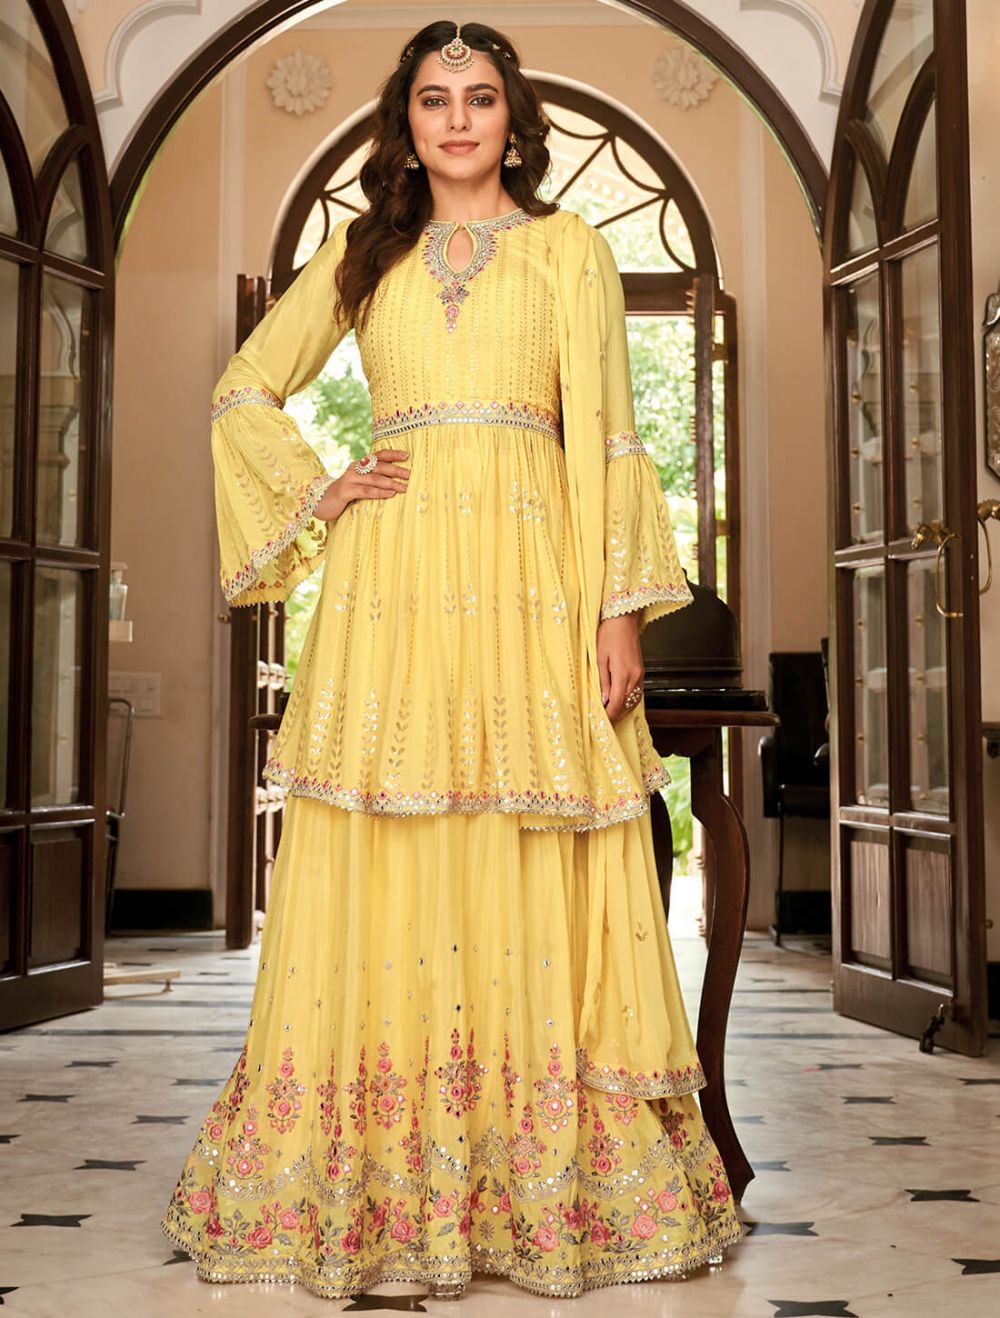 Pink Tradition Designer Wedding Lehenga Suit - Indian Heavy Anarkali Lehenga  Gowns Sharara Sarees Pakistani Dresses in USA/UK/Canada/UAE - IndiaBoulevard